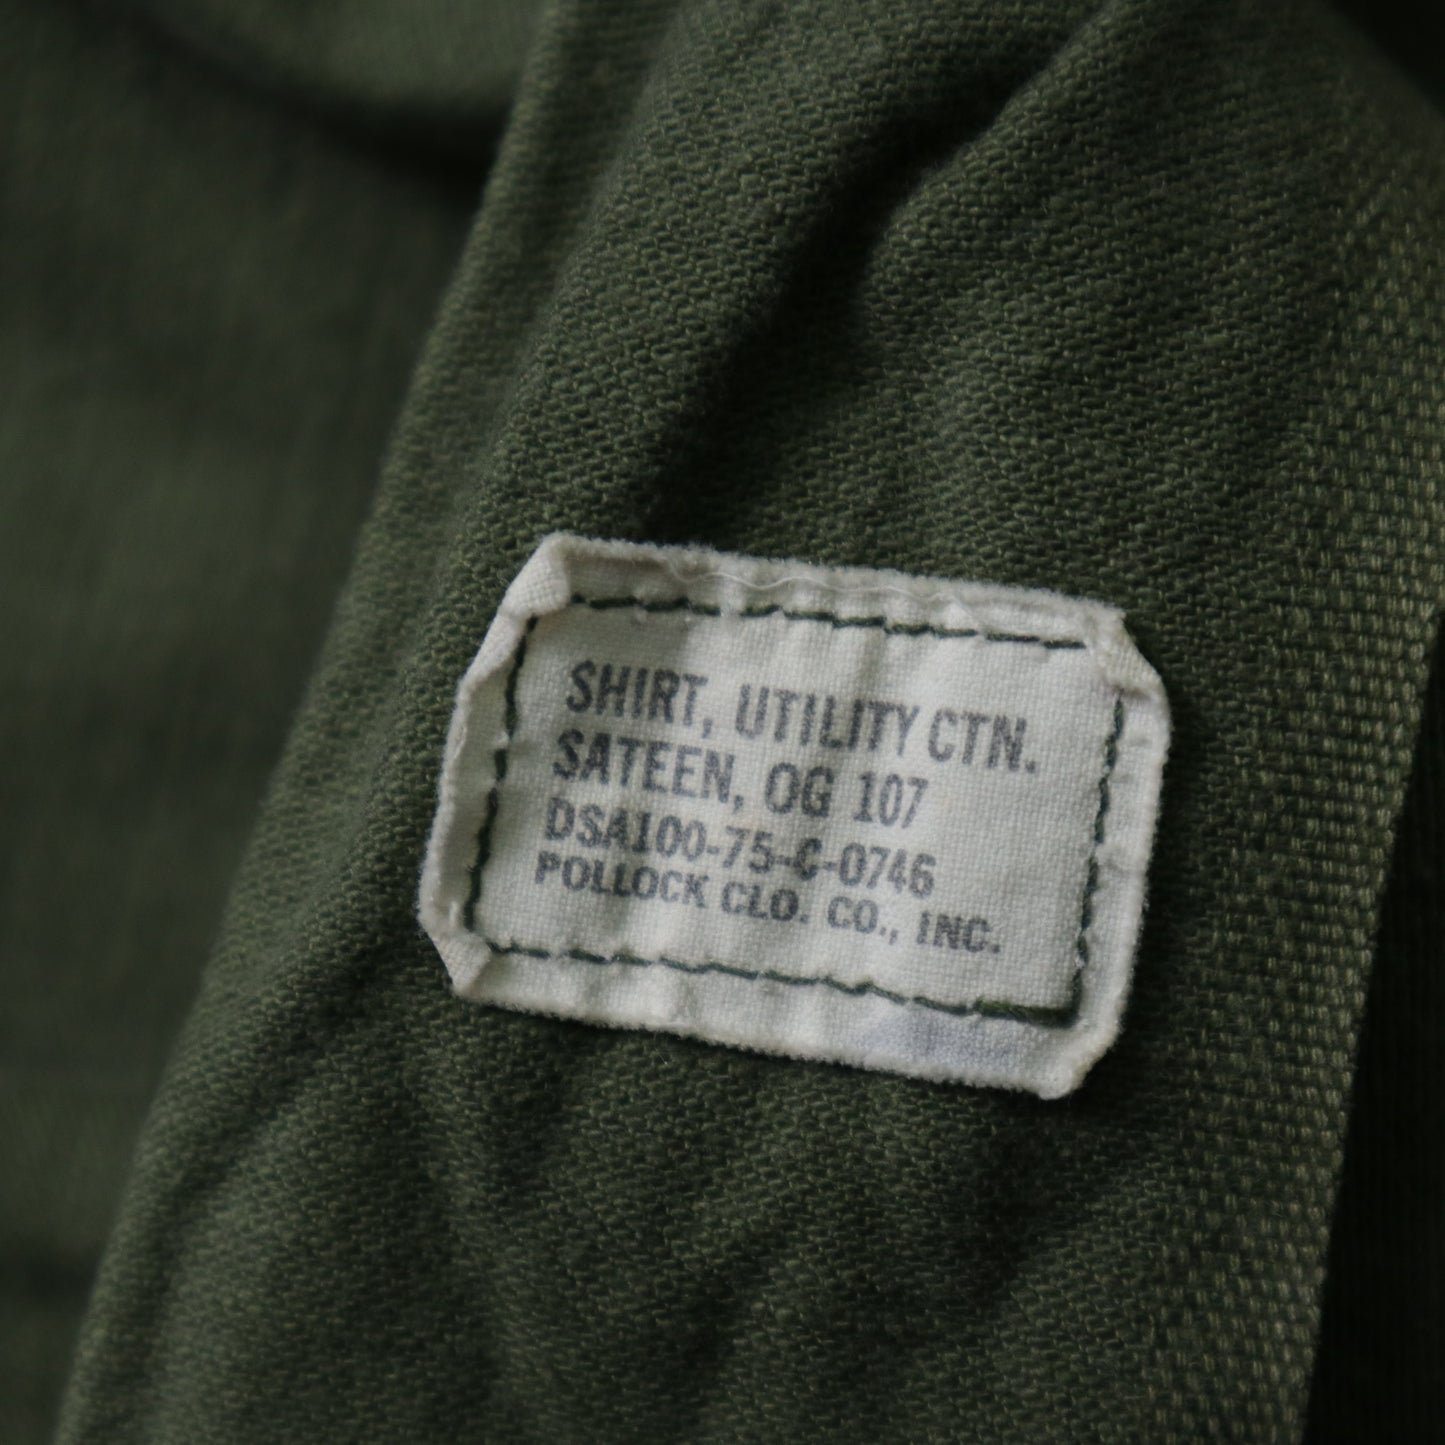 70s US ARMY OG107 Utility Shirt U.S. Army Public Hair Army Shirt